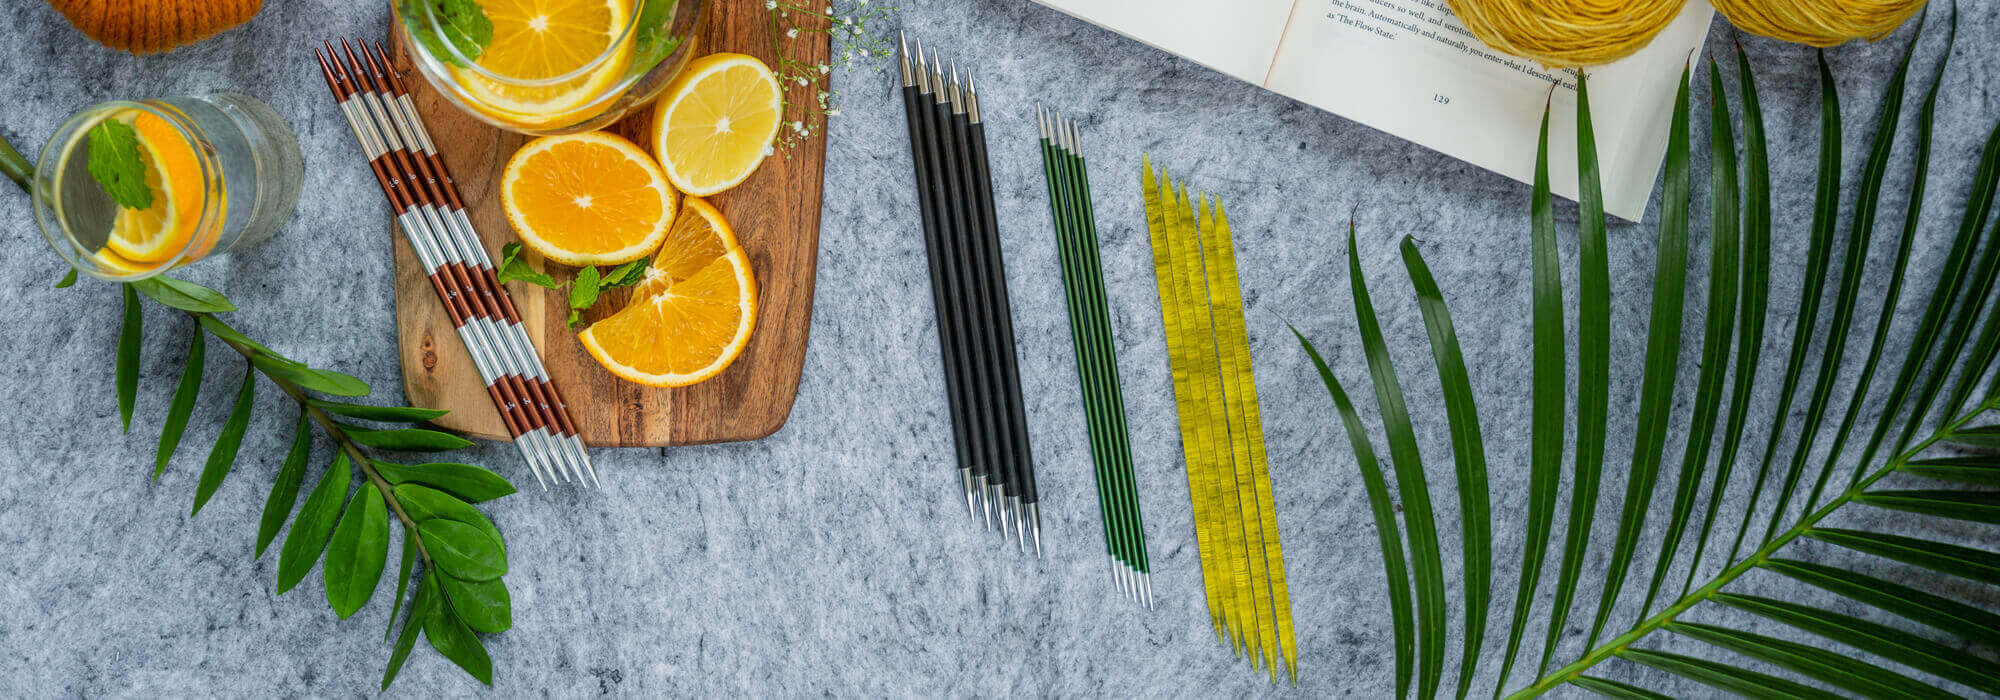 Best Knitting Needles & Accessories | KnitPro